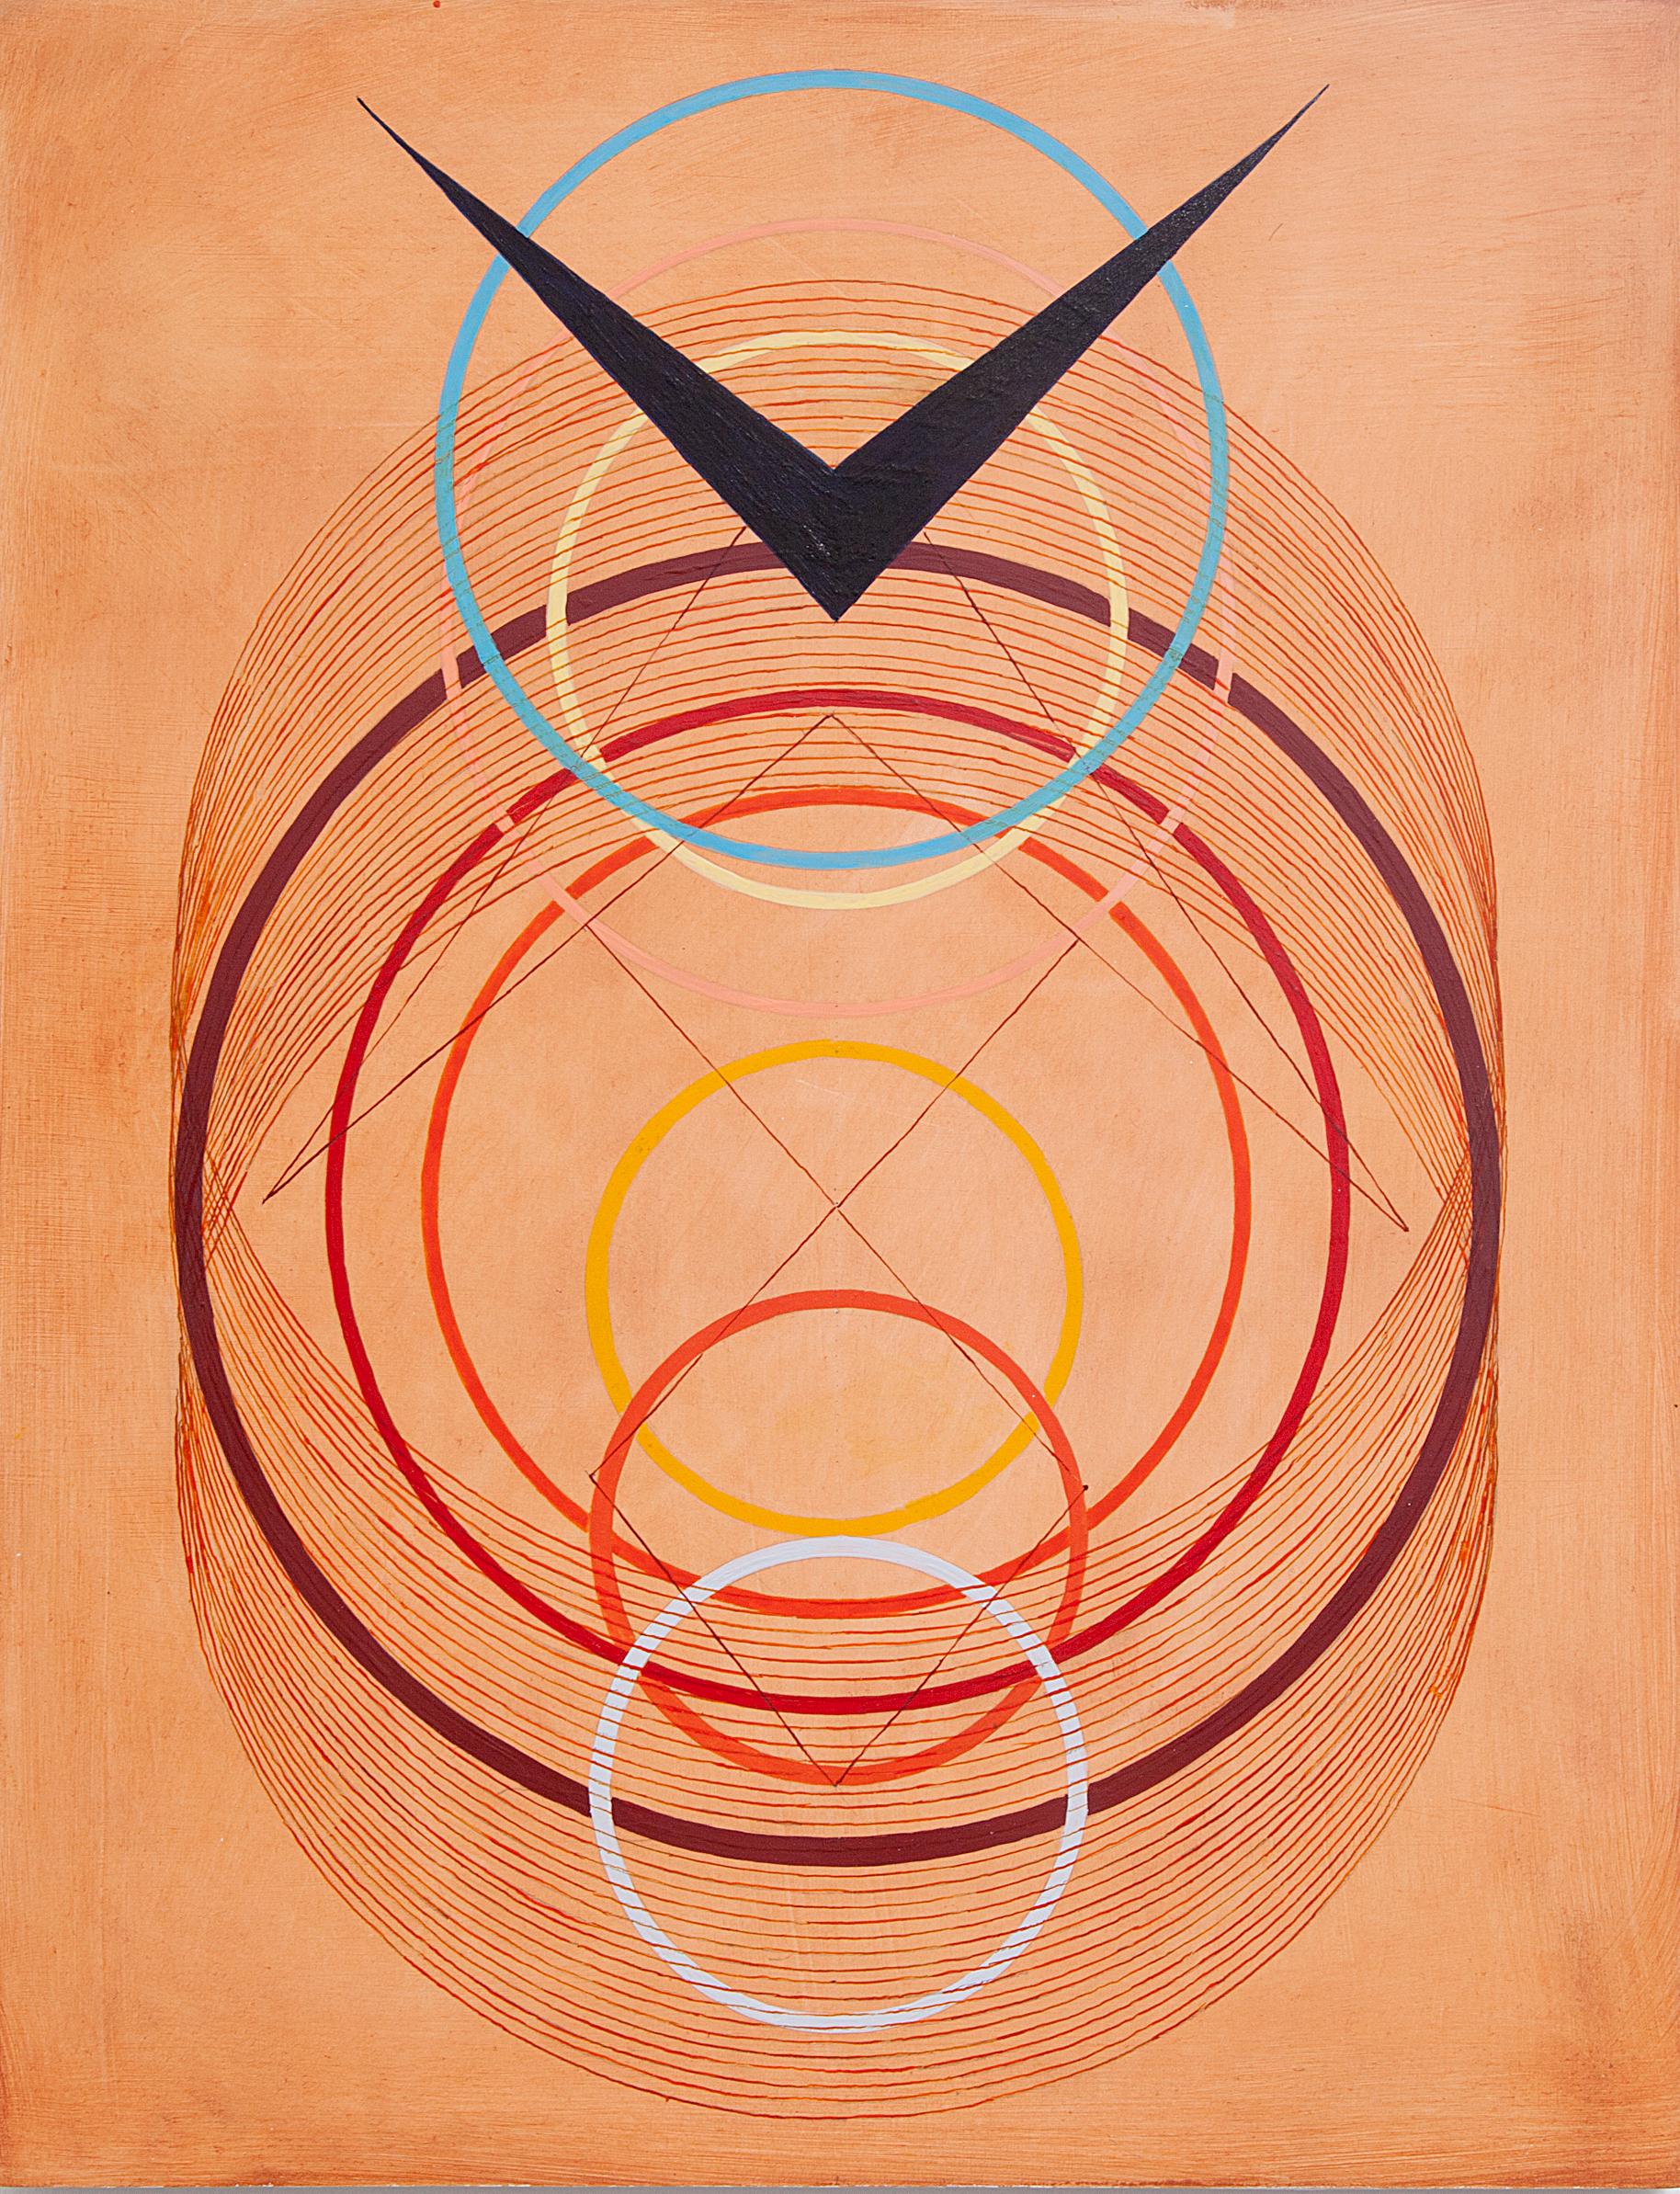 Tayo Heuser, Arrival, 2016, ink on wood panel, Meditative, Abstract Geometric